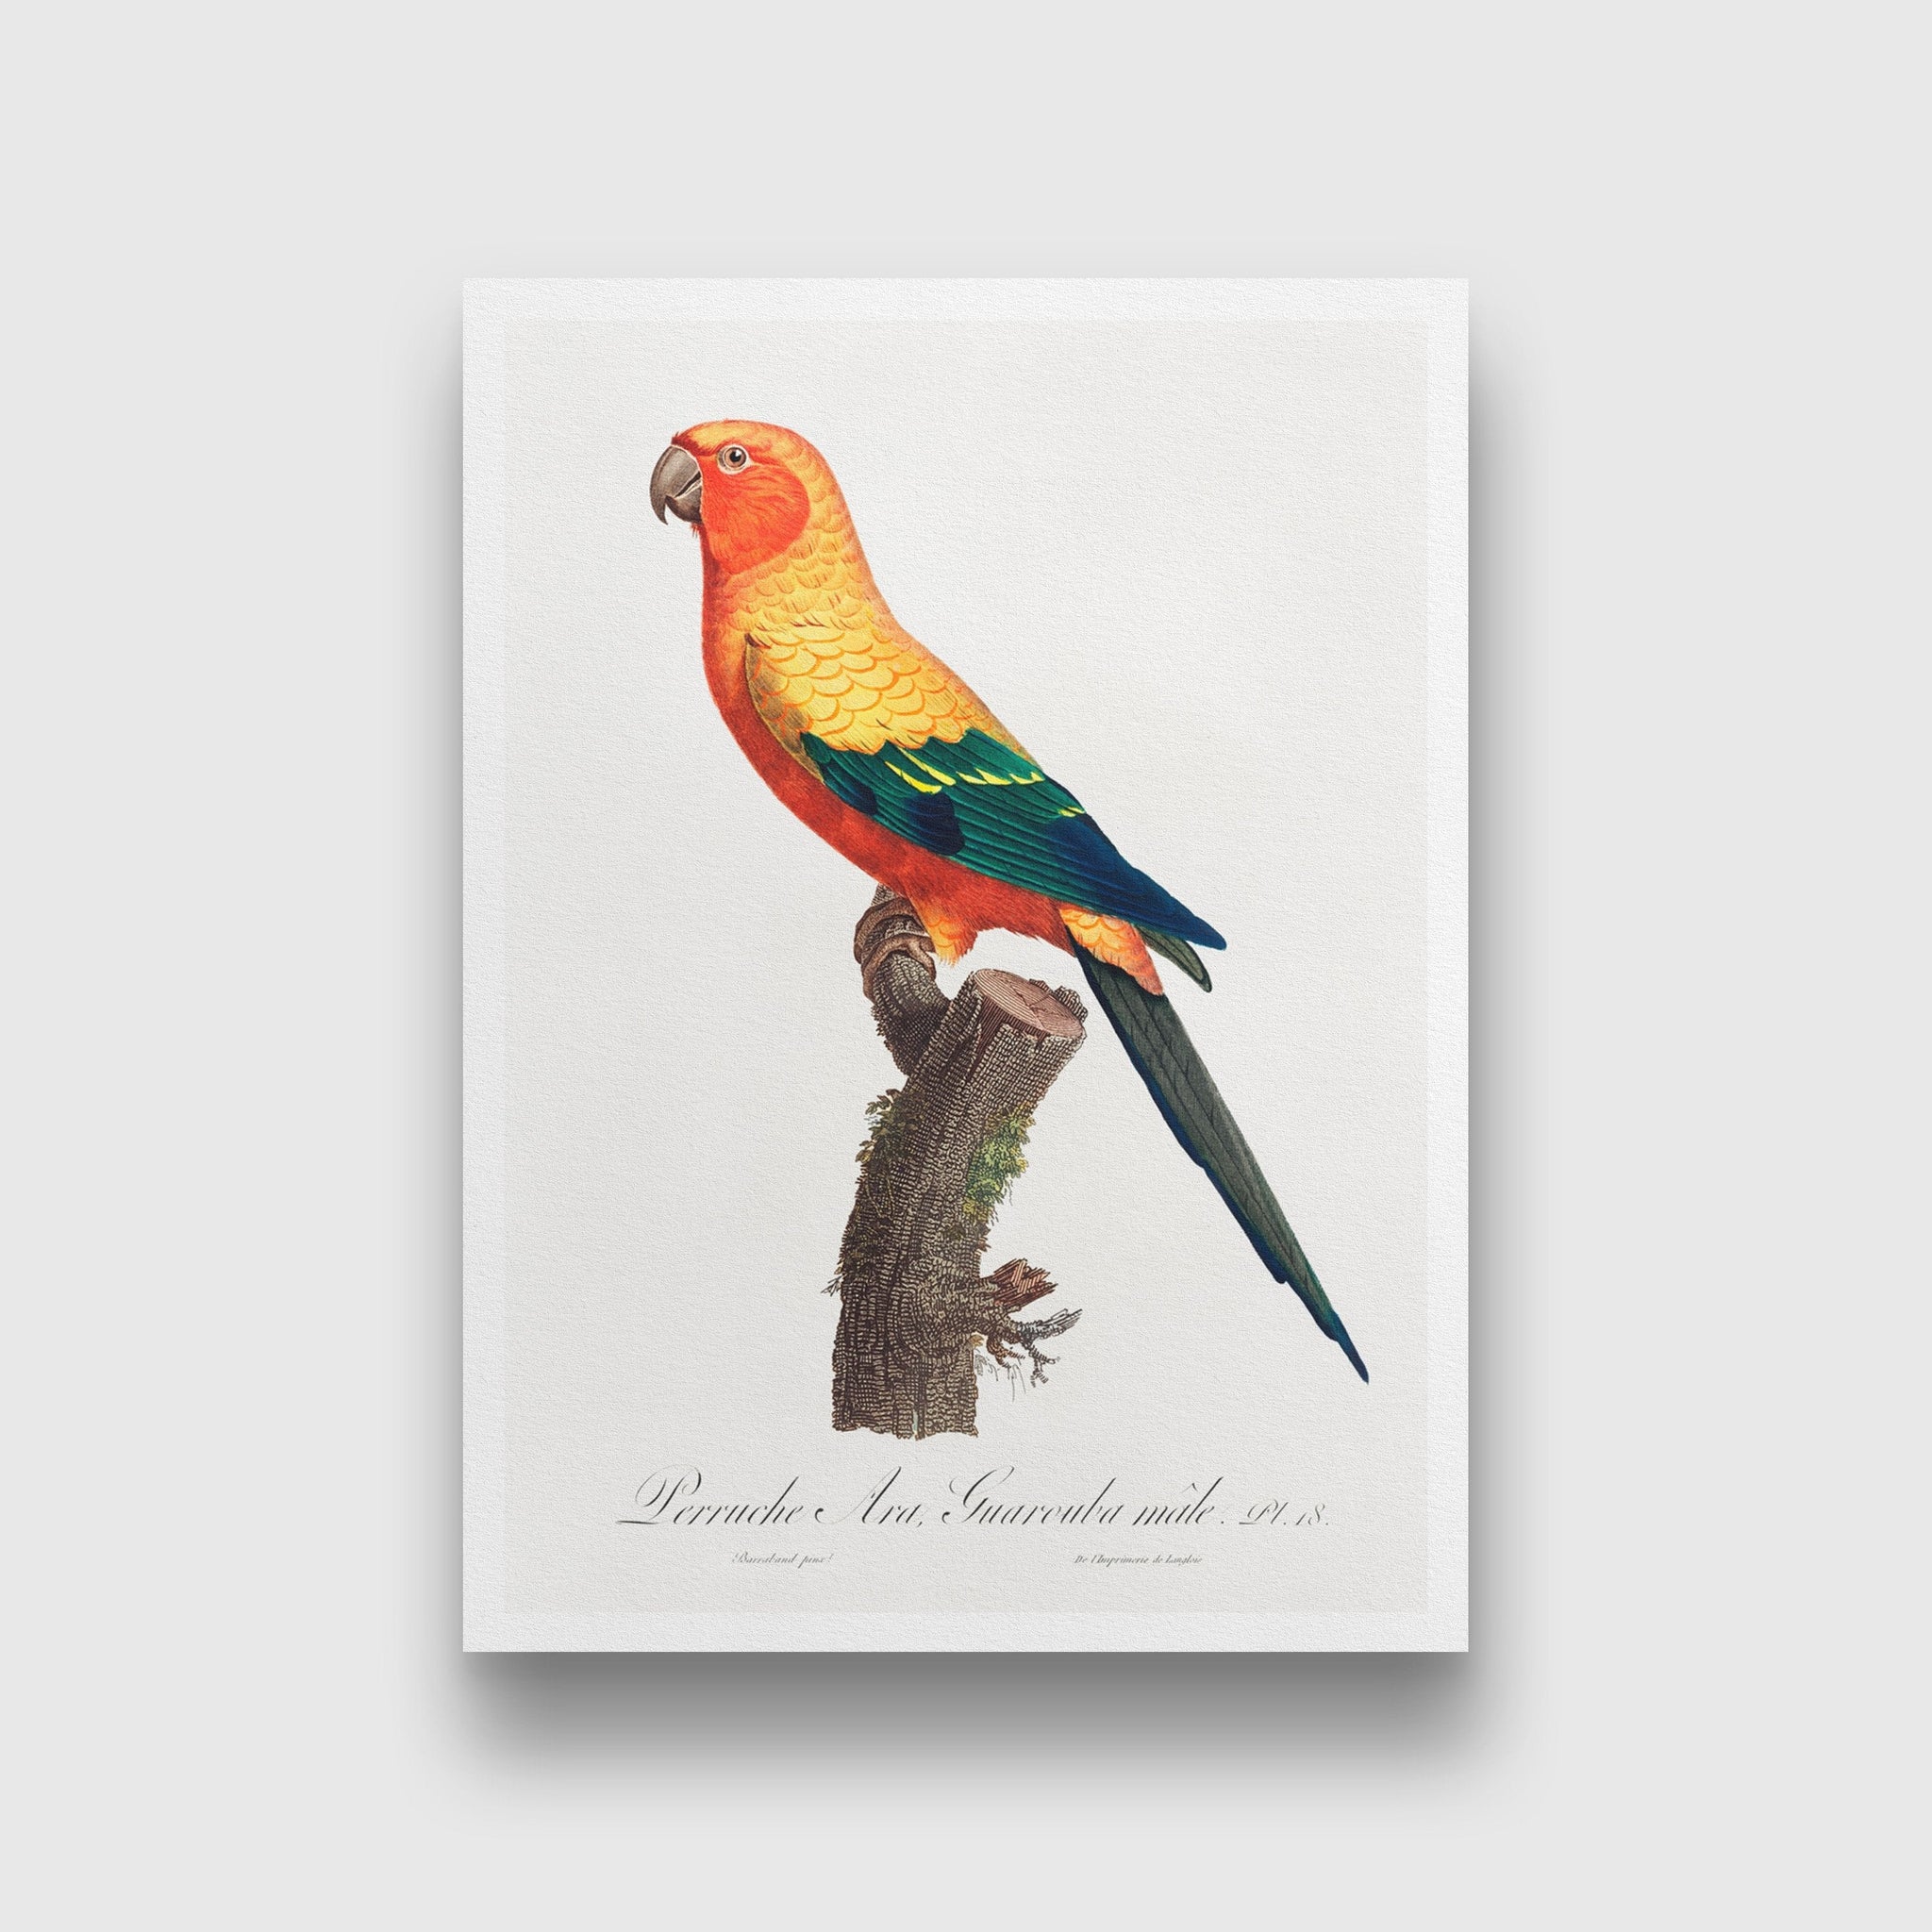 The Sun Parakeet, Aratinga solstitialis, male from Natural History of Parrots Painting - Meri Deewar